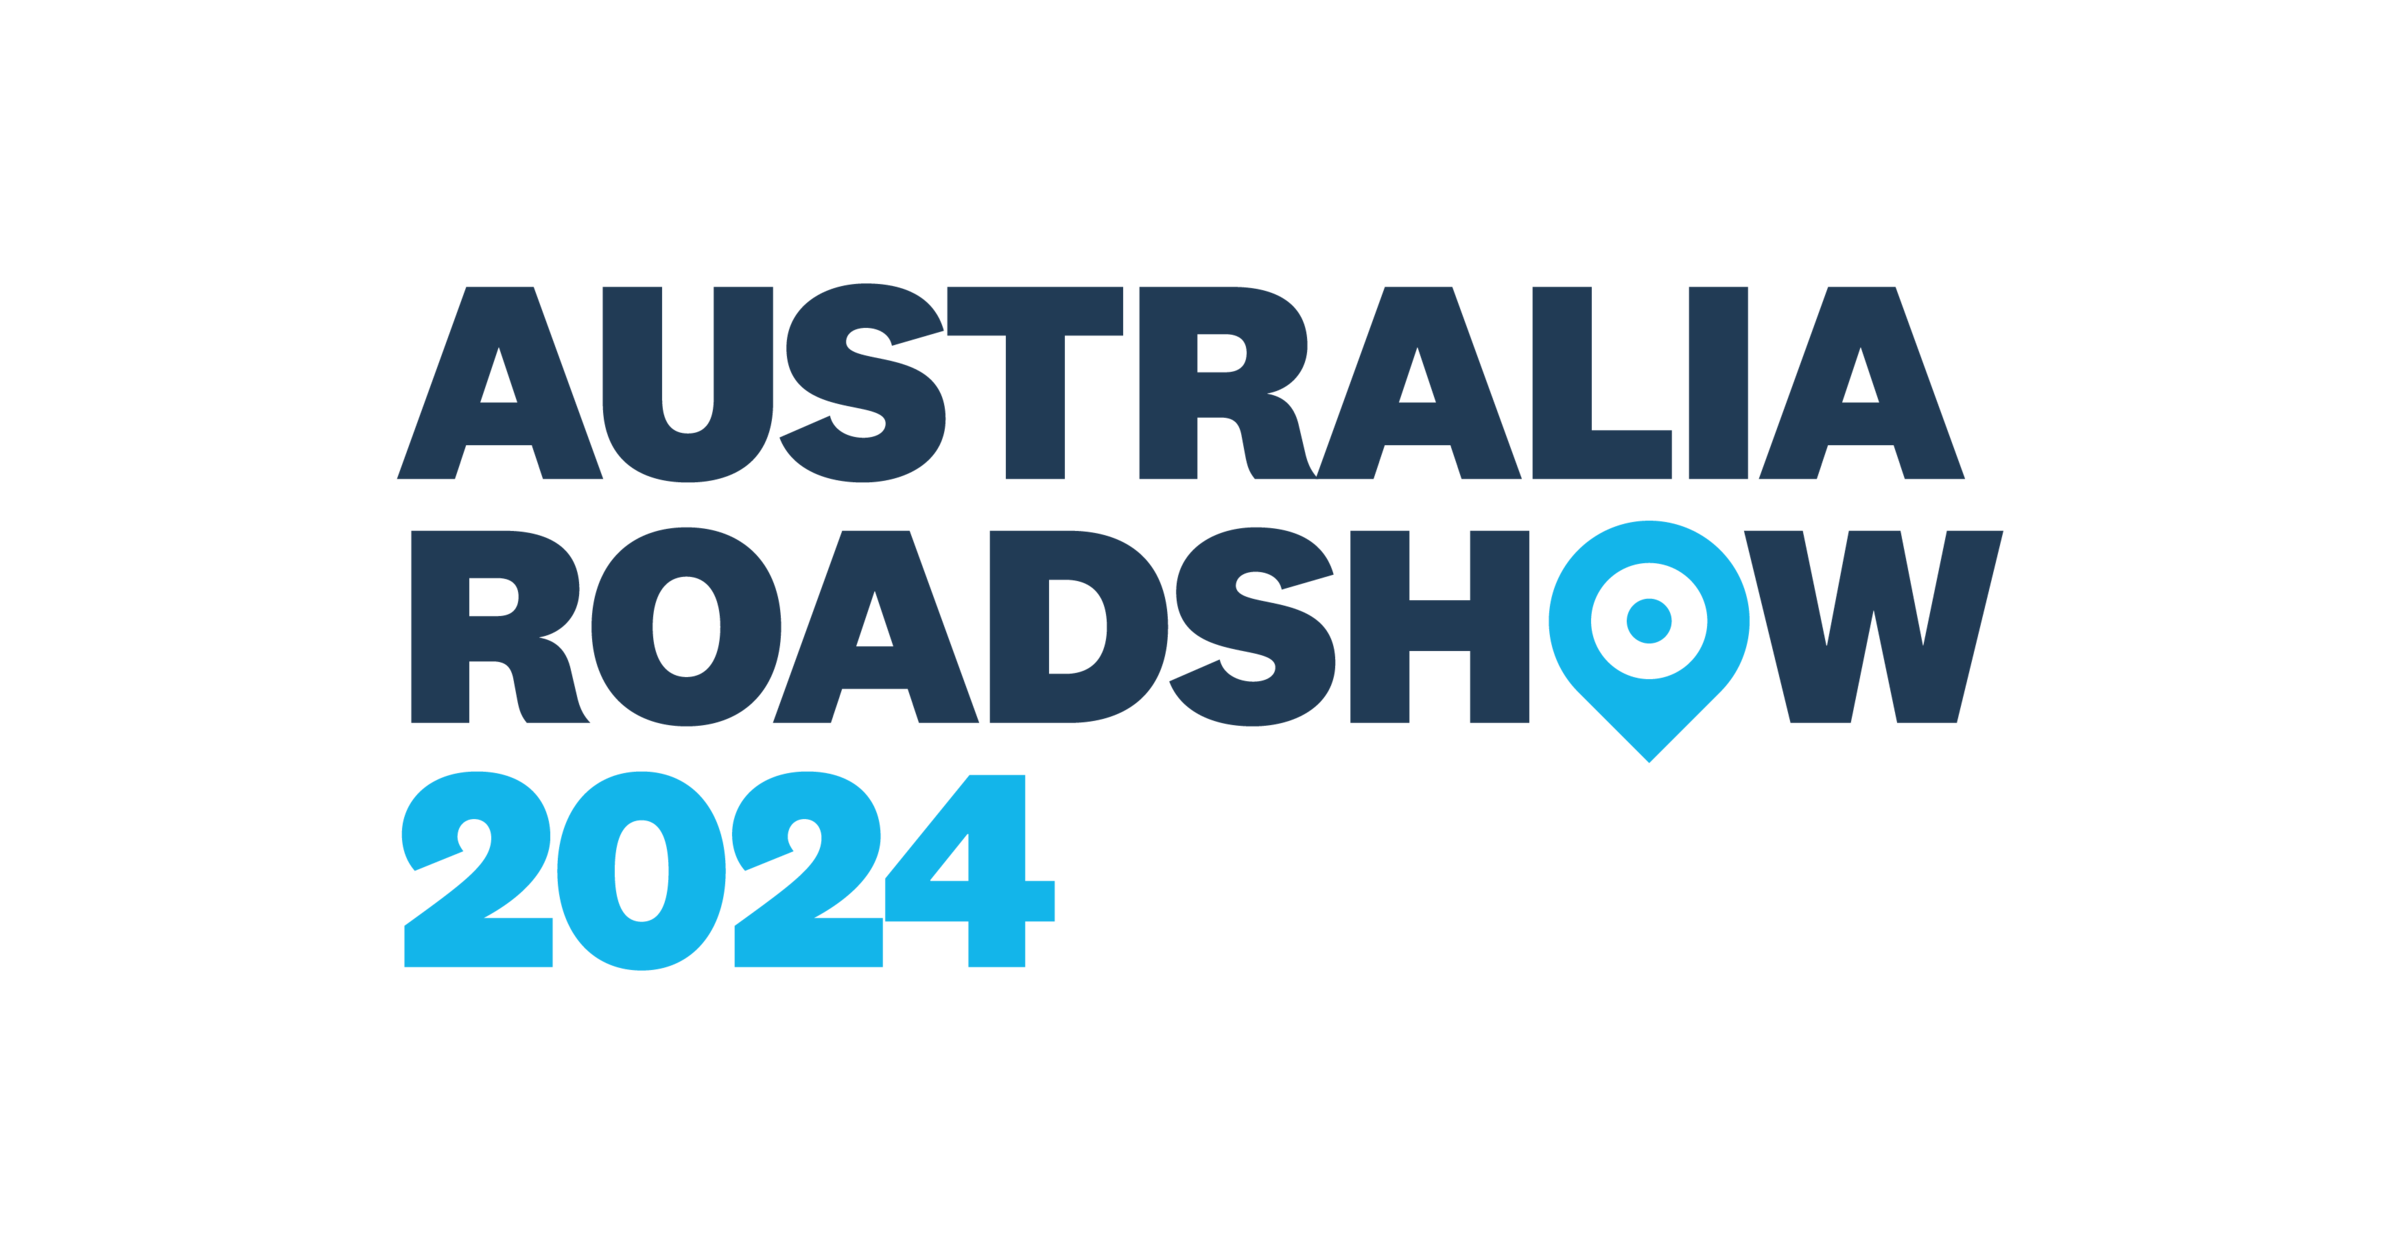 The Australia Roadshow 2023 logo